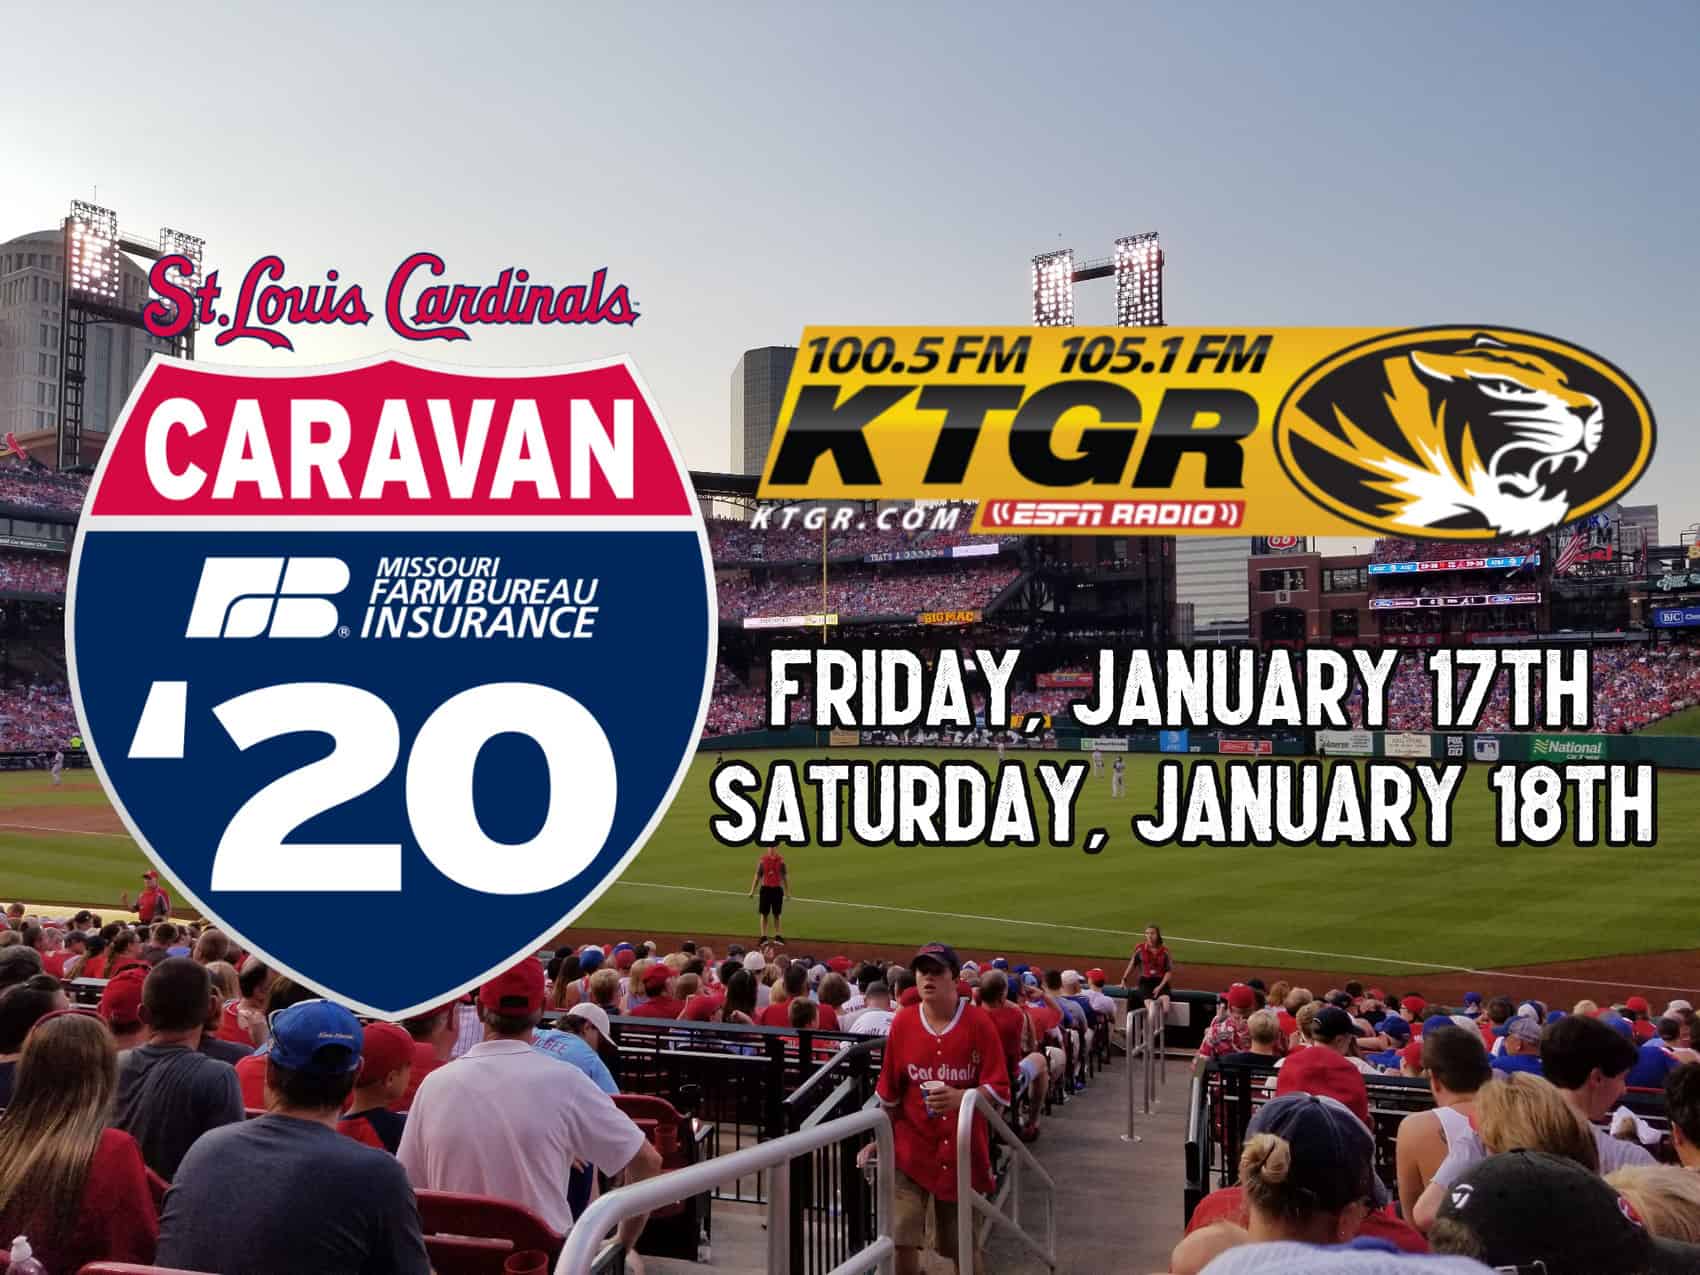 Cardinals Caravan 2020 Comes to Mid-MO - KTGR